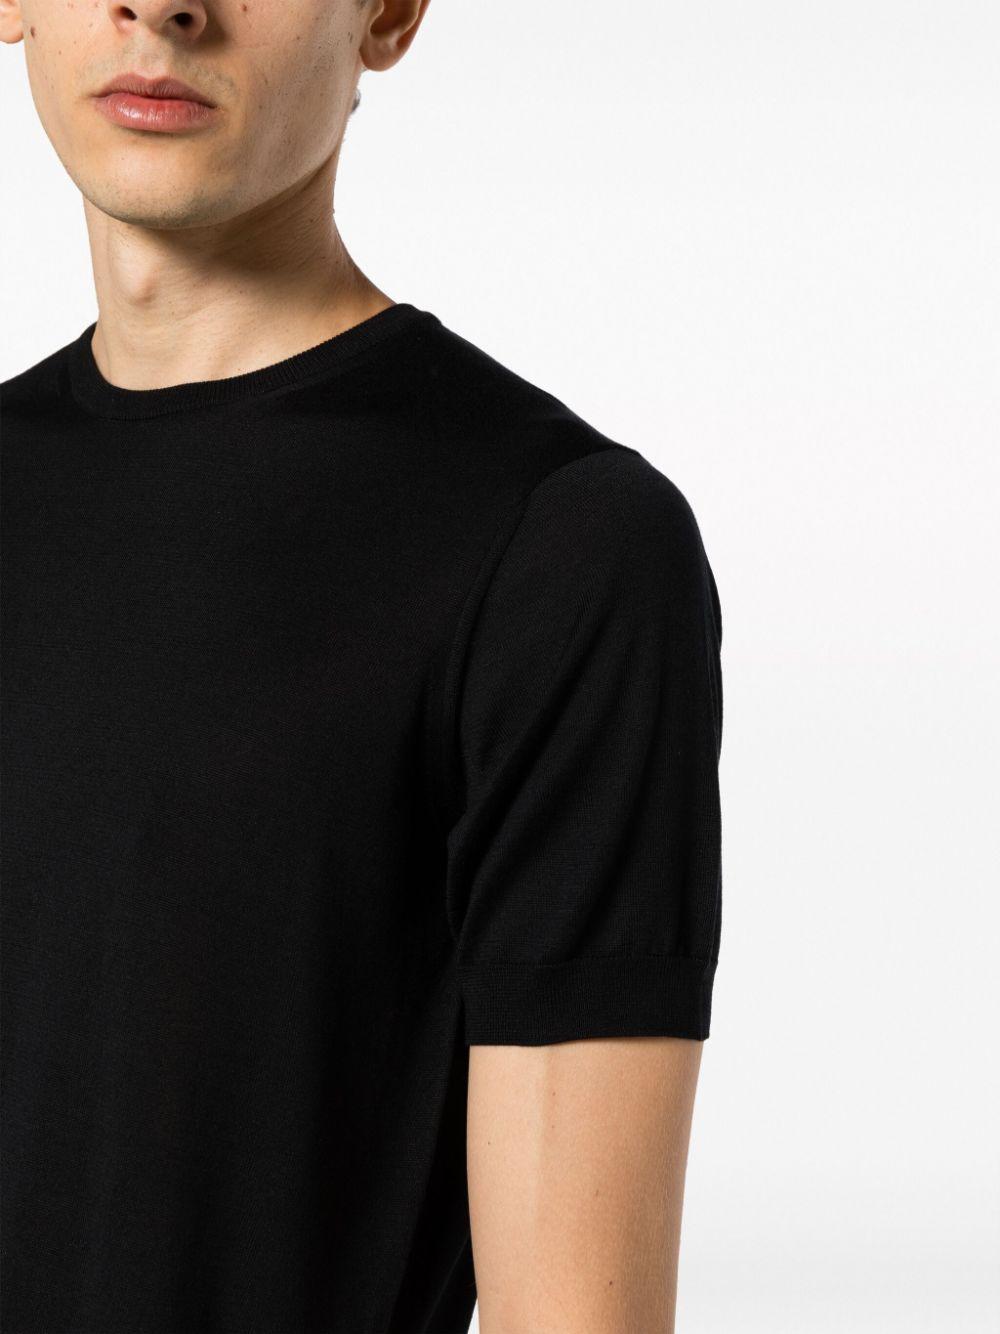 Giorgio Armani Men's Short-sleeved Cotton Shirt